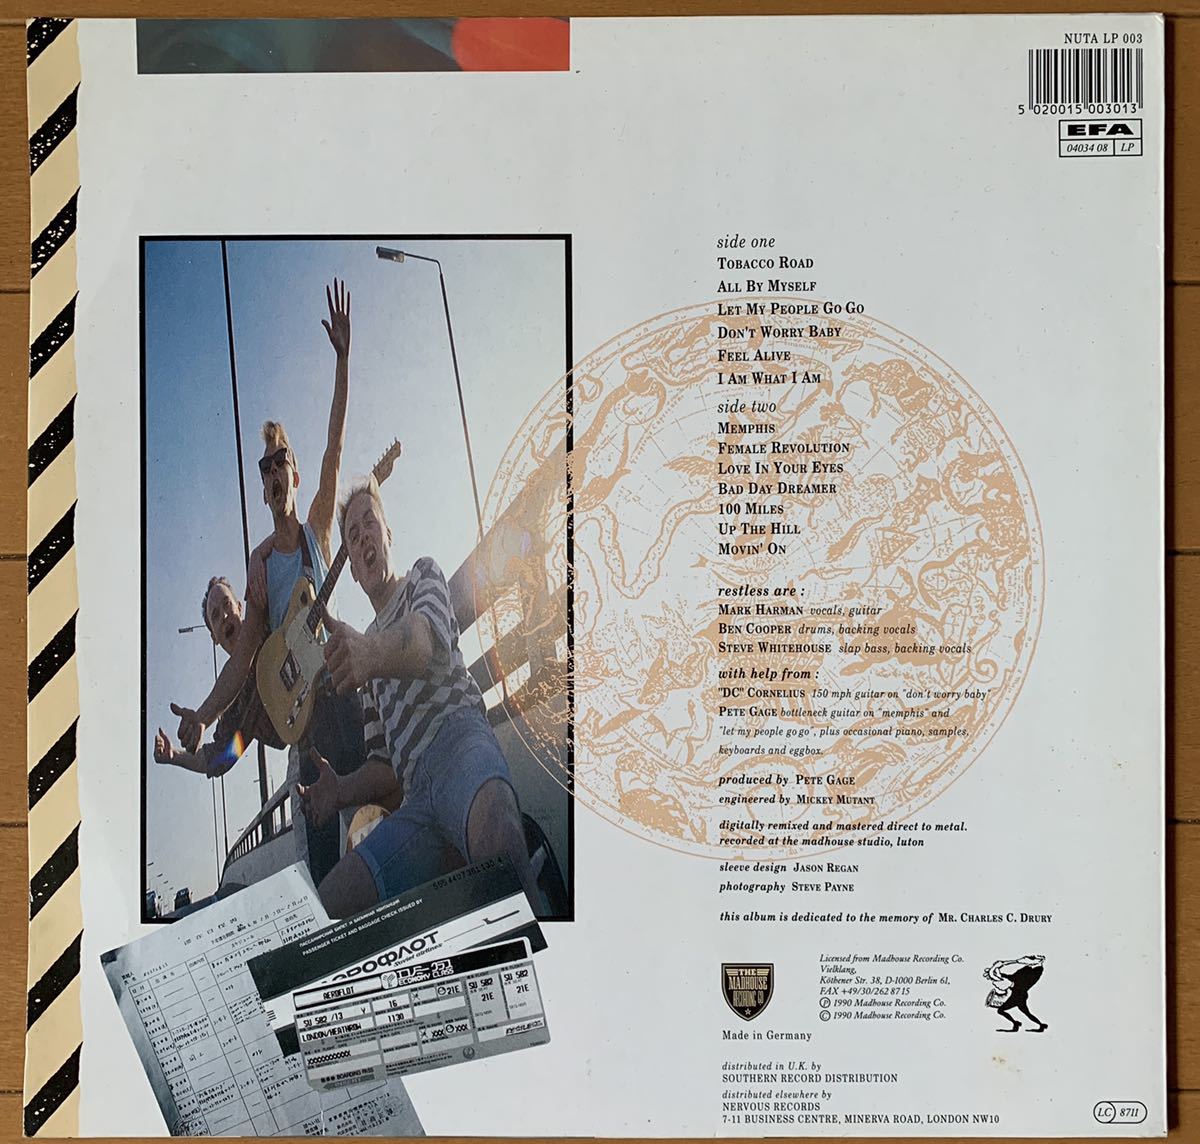 RESTLESS ネオロカ 1990年MADHOUSE ロカビリー、LP、MOVIN’ON 、サイコビリー 、レア盤、FEEL ALIVE収録、STEEVE WHITEHOUSE、_画像2